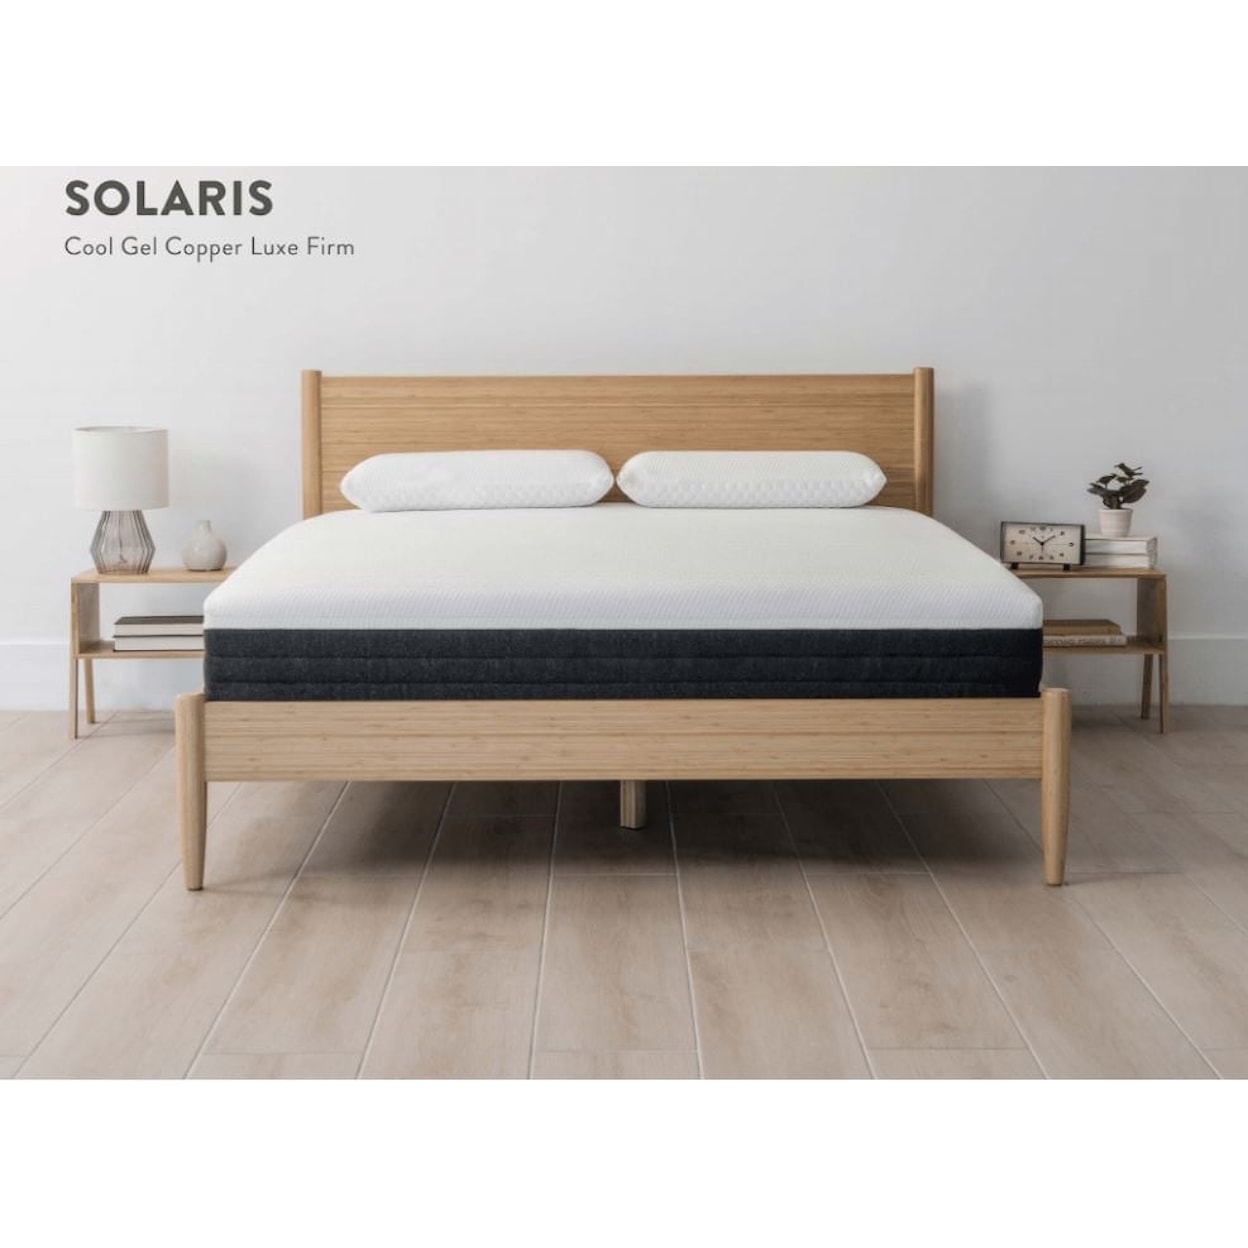 Sam Levitz Signature Series Solaris 8" Lux Firm Twin XL Mattress